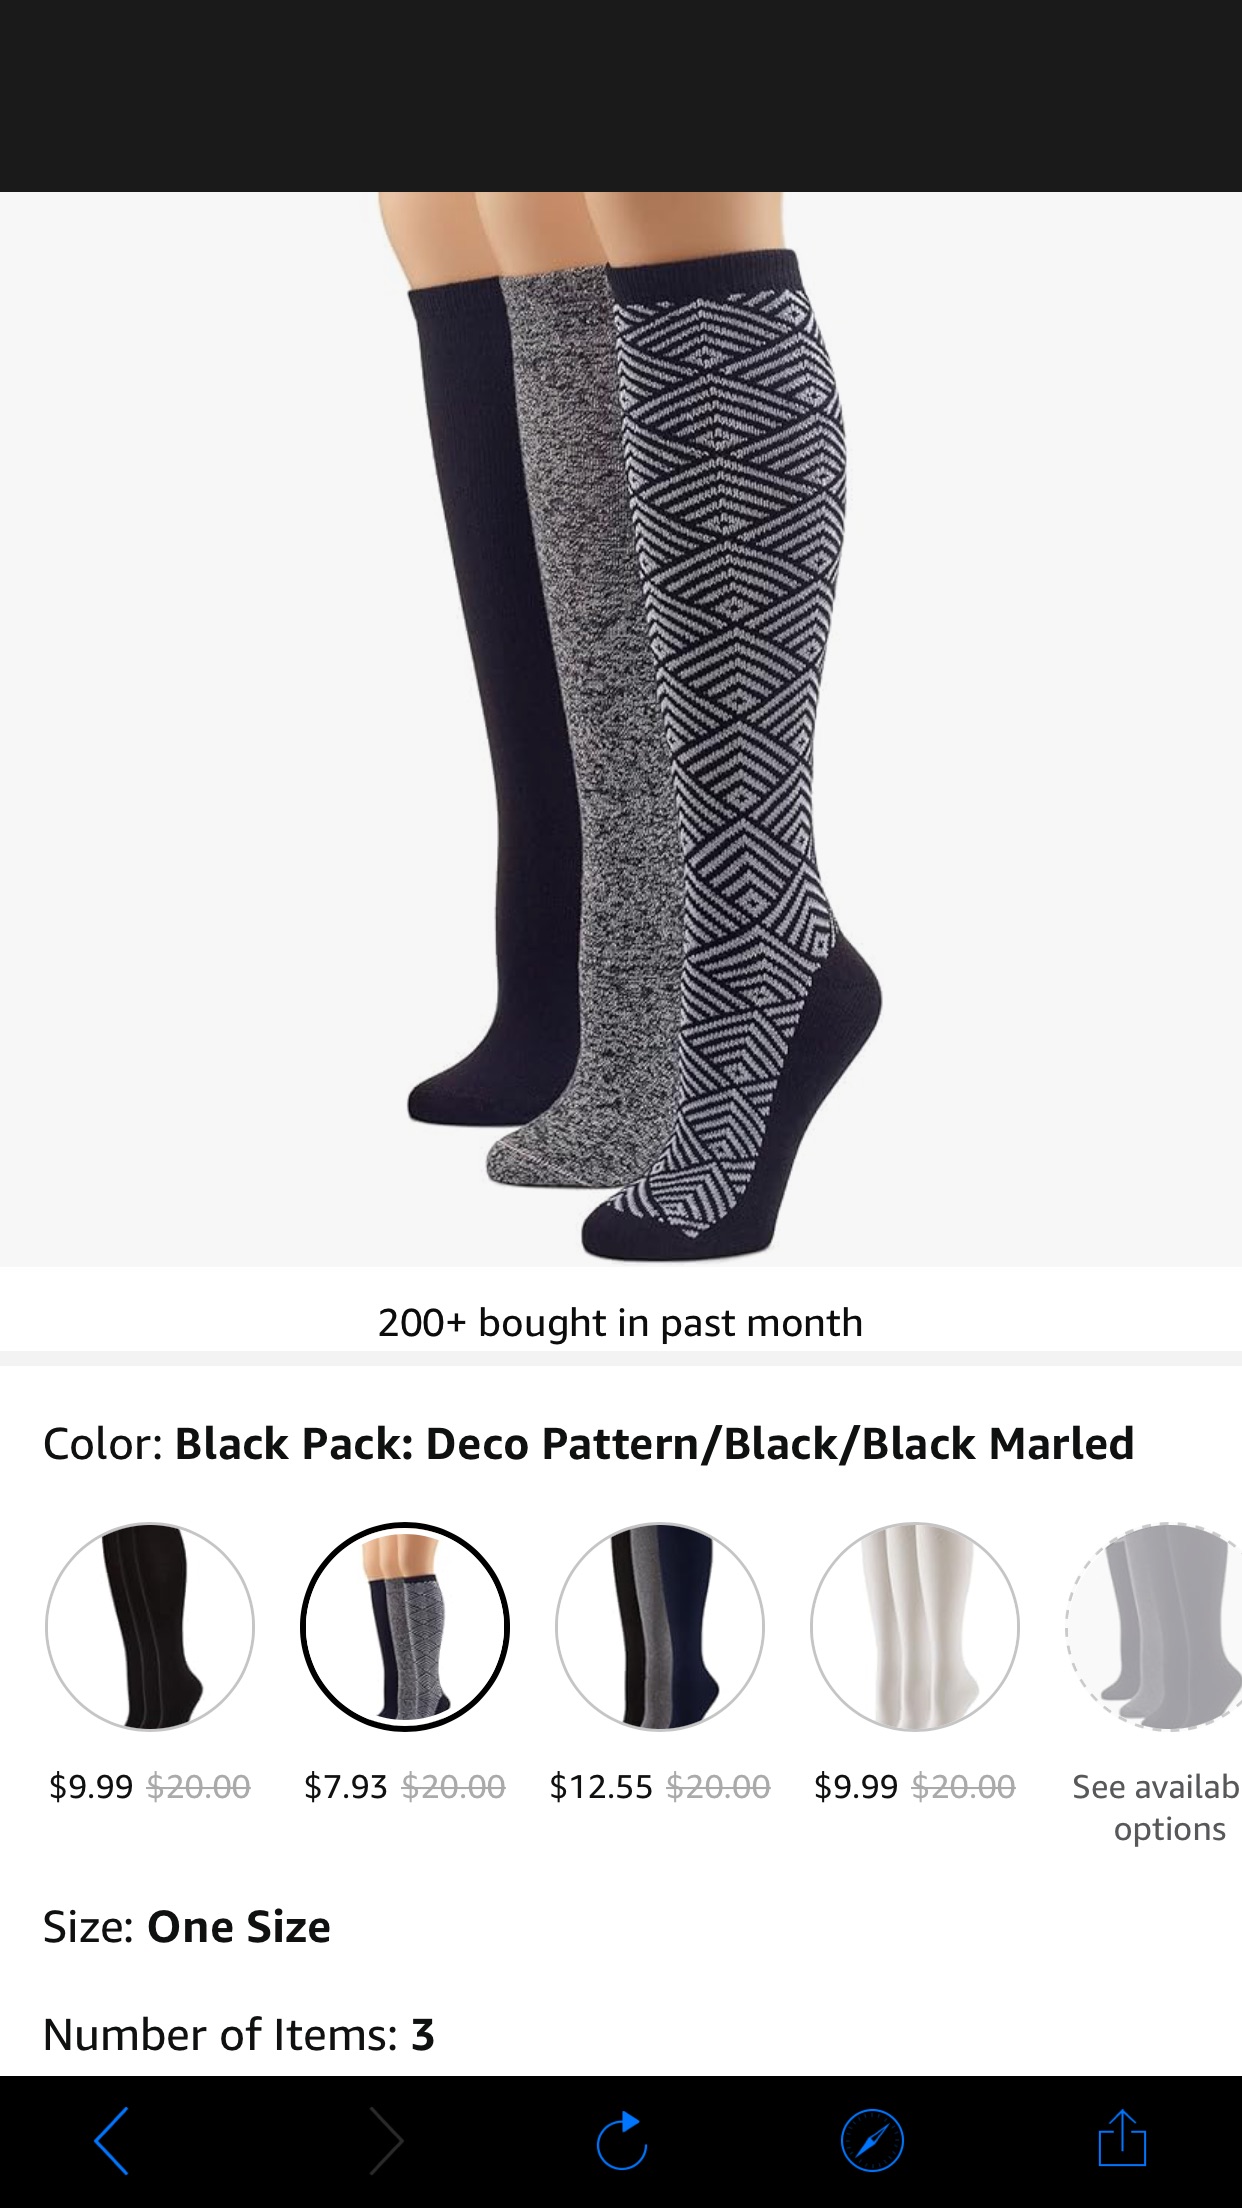 Amazon.com: Hue Women's Flat Knit Knee High Sock,One Size US, 3 Pairs